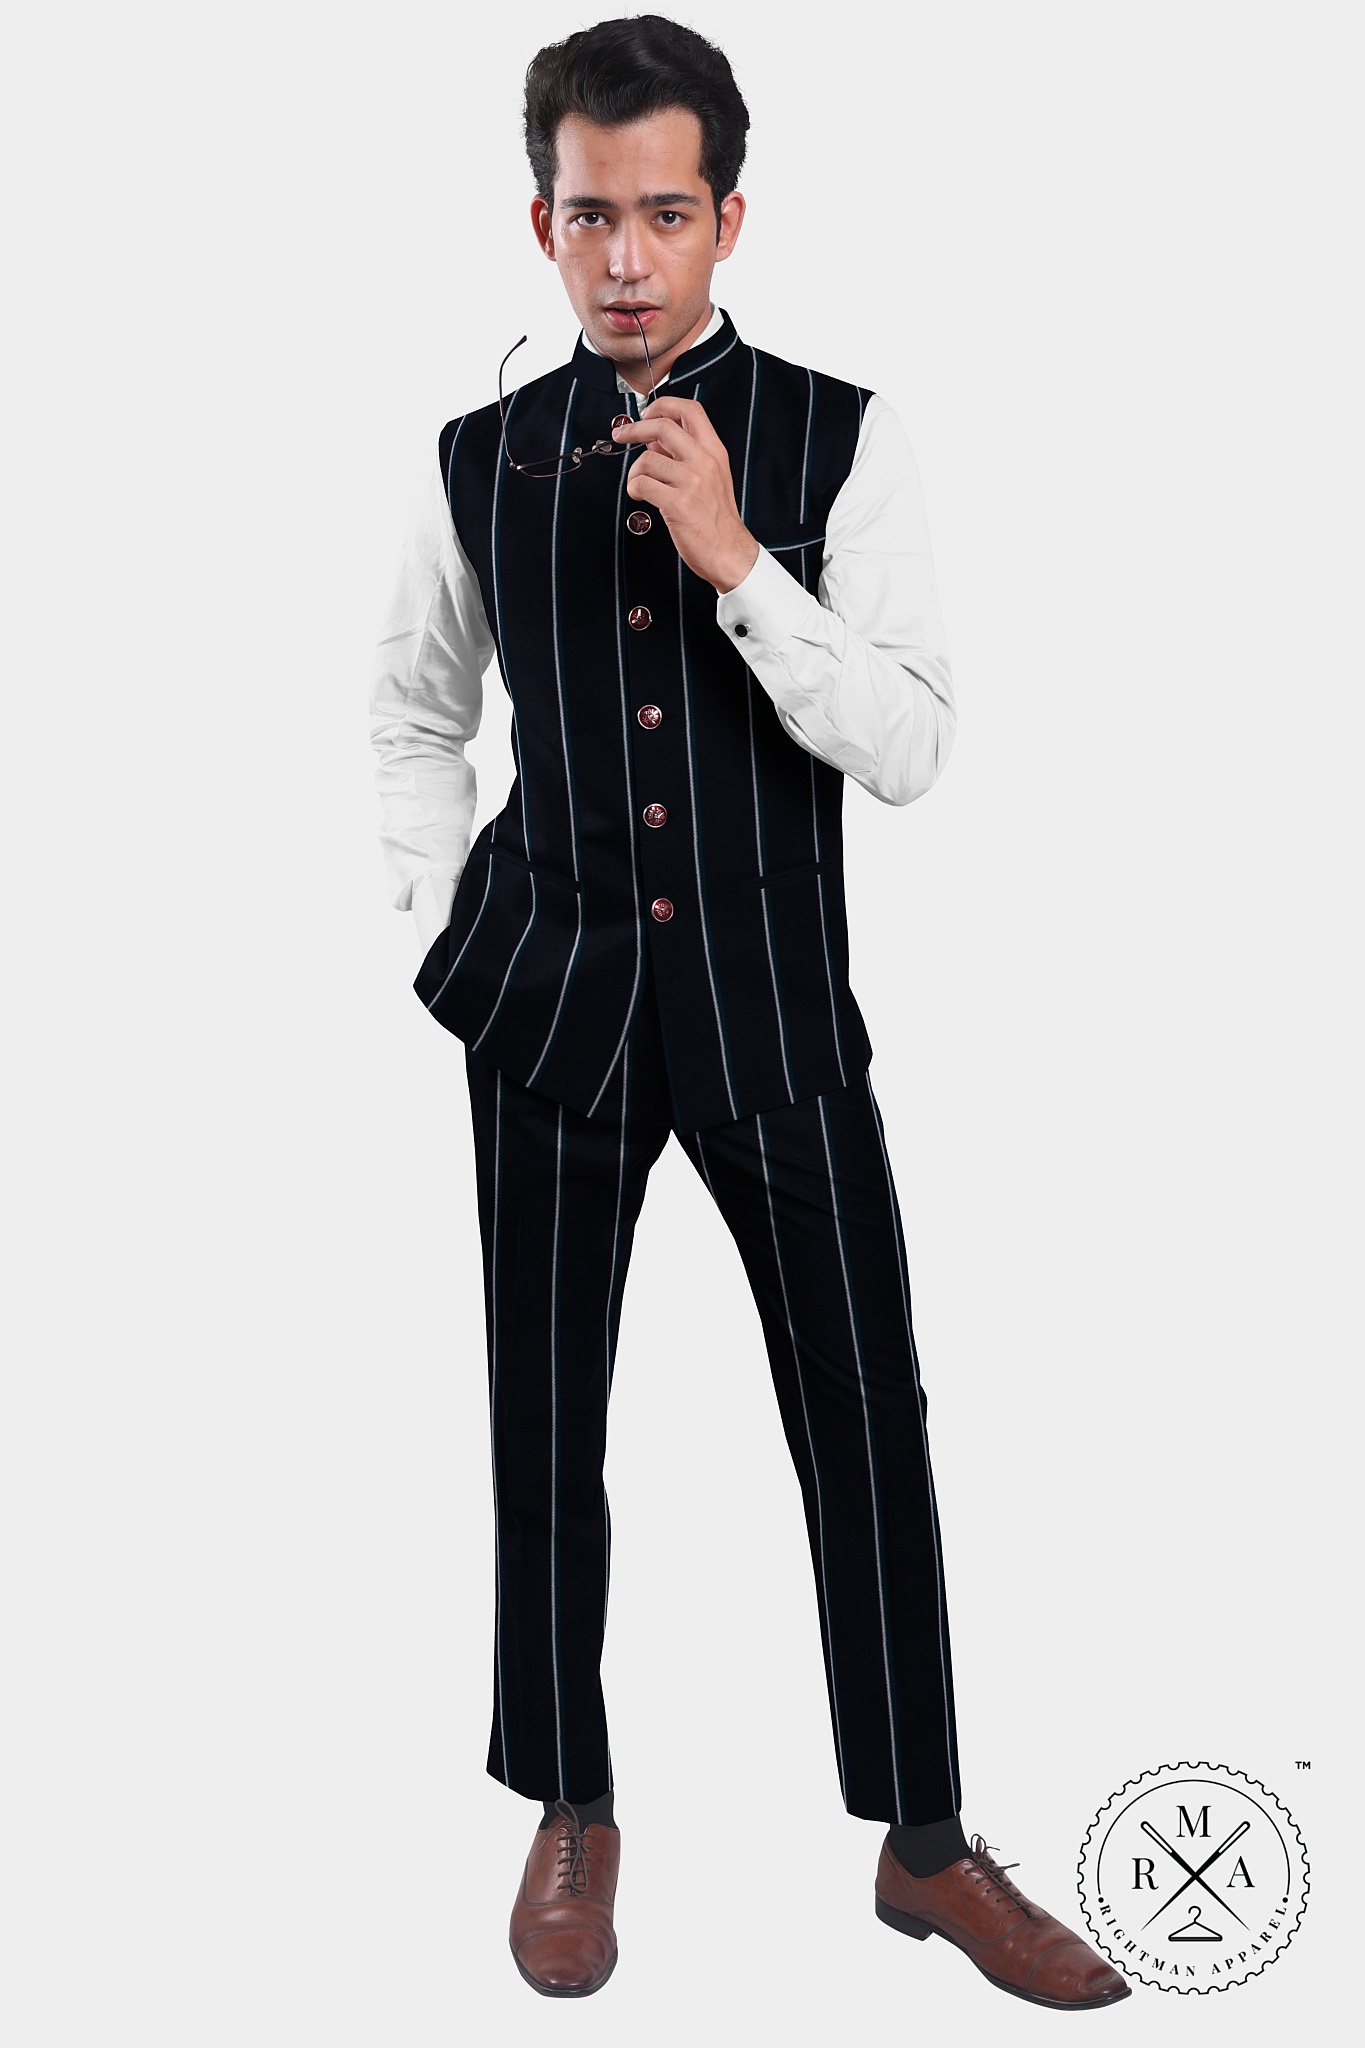 Buy 9times Men's Black Waistcoat Latest V Neck Sleeveless Slim Half Jacket  Formal Casual Stylish Coat for Wedding Party Festive Office Wear (Standard,  36, Black) at Amazon.in